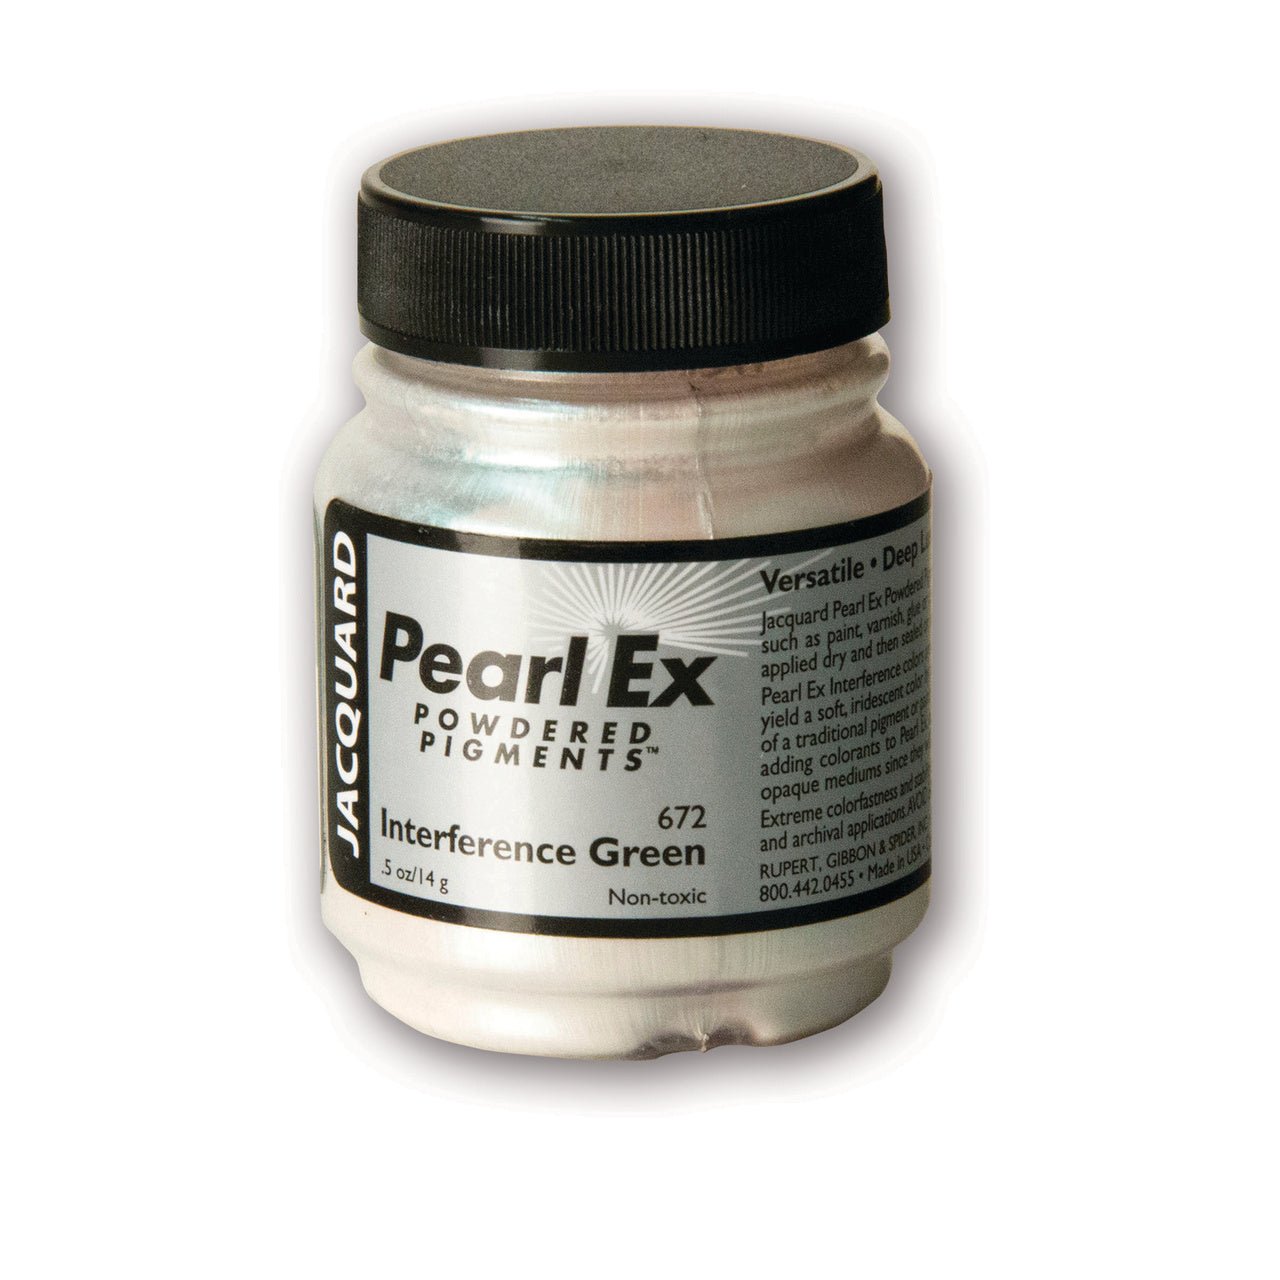 Jacquard Pearl-Ex Powdered Pigment .5 Oz Interference Green - merriartist.com